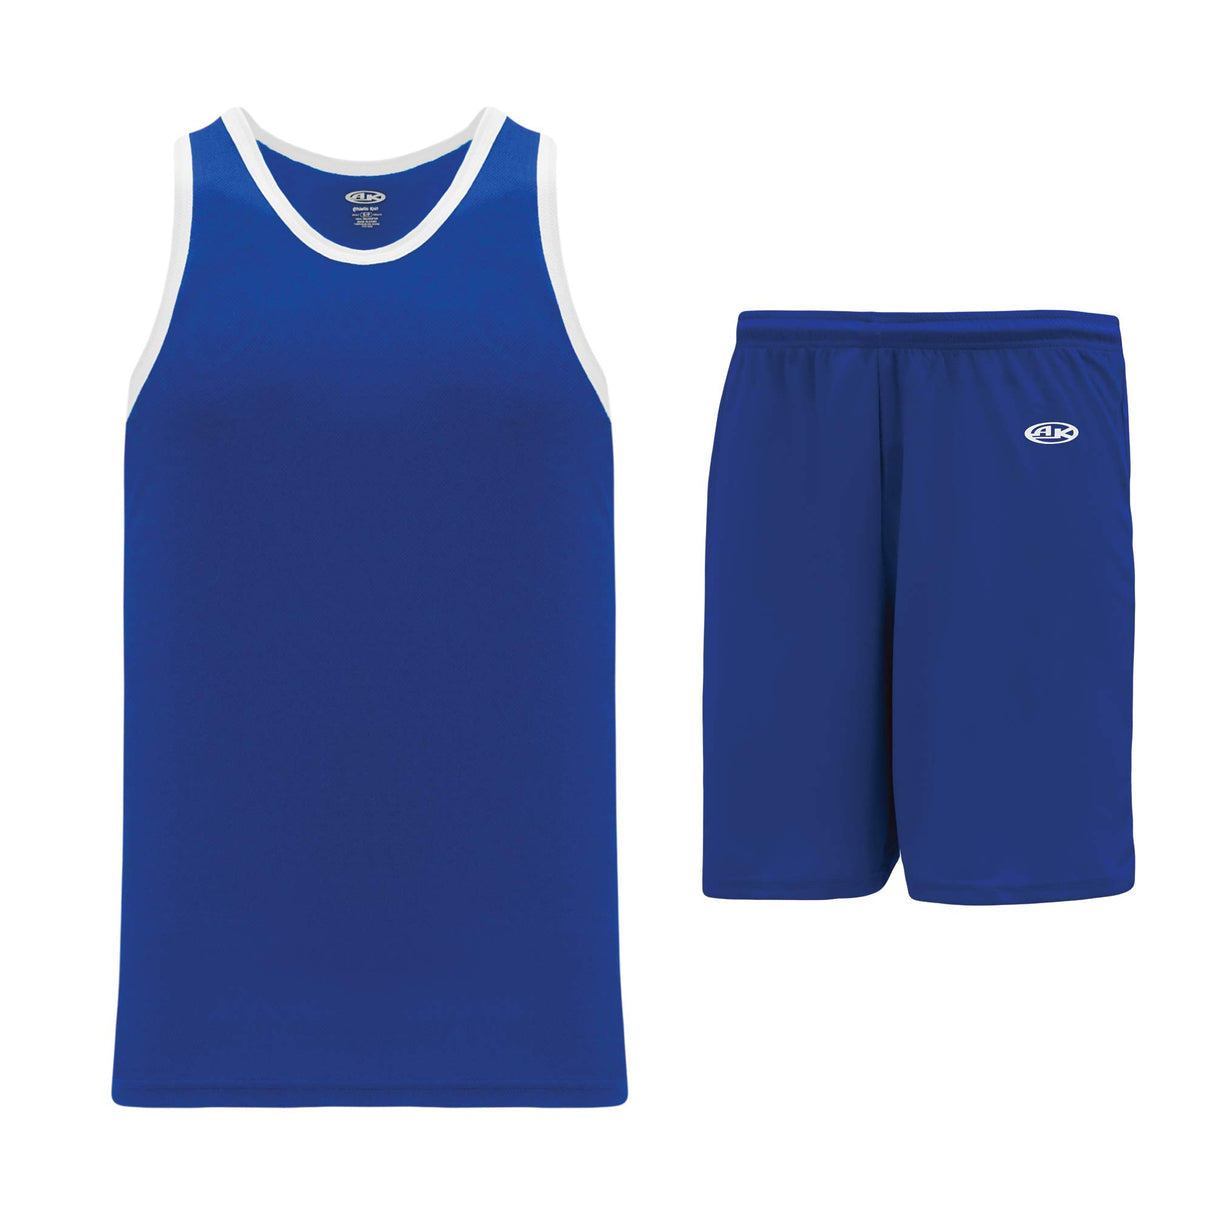 Athletic Knit B1325 ensemble basket camisole short bleu blanc